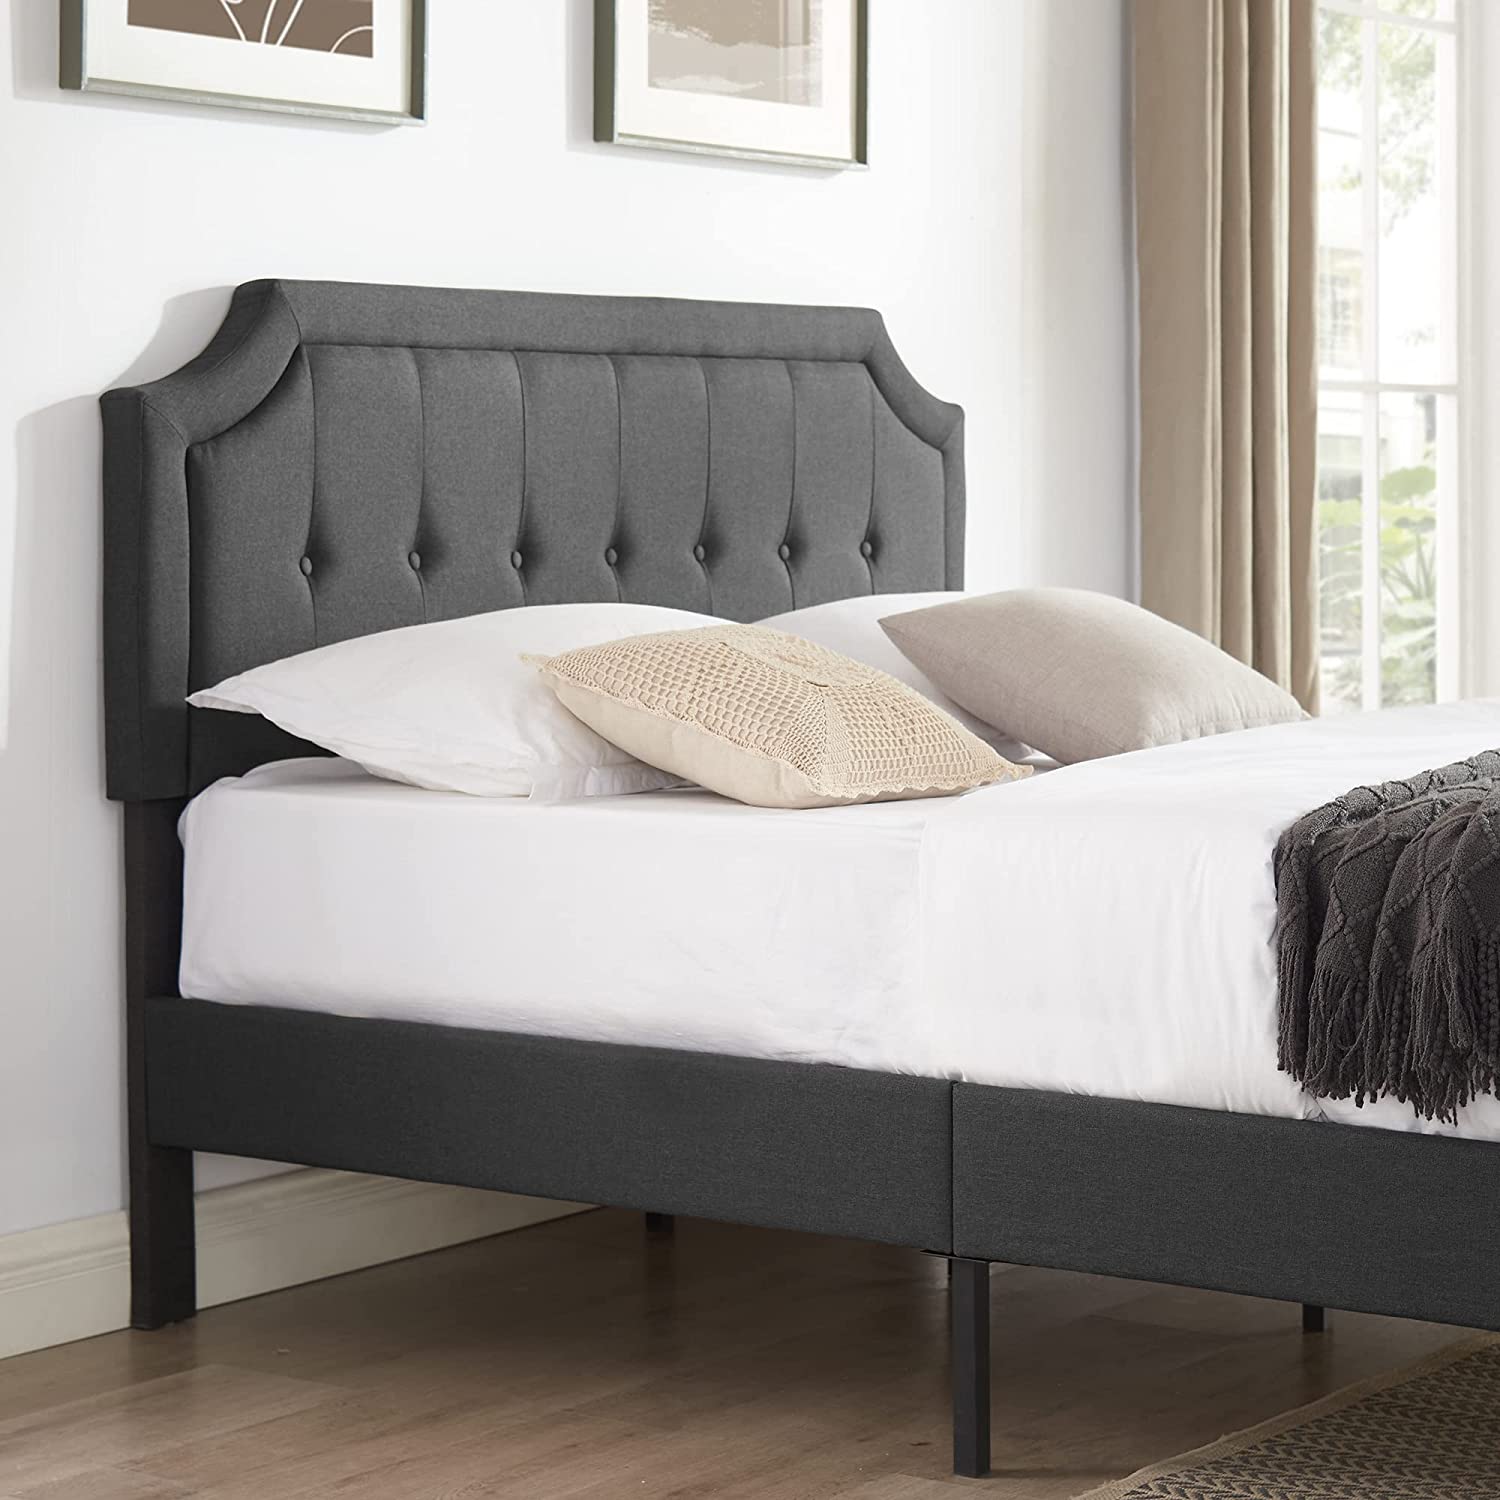 VECELO Grey Premium Upholstered Platform Bed Diamond Stitched Panel Headboard